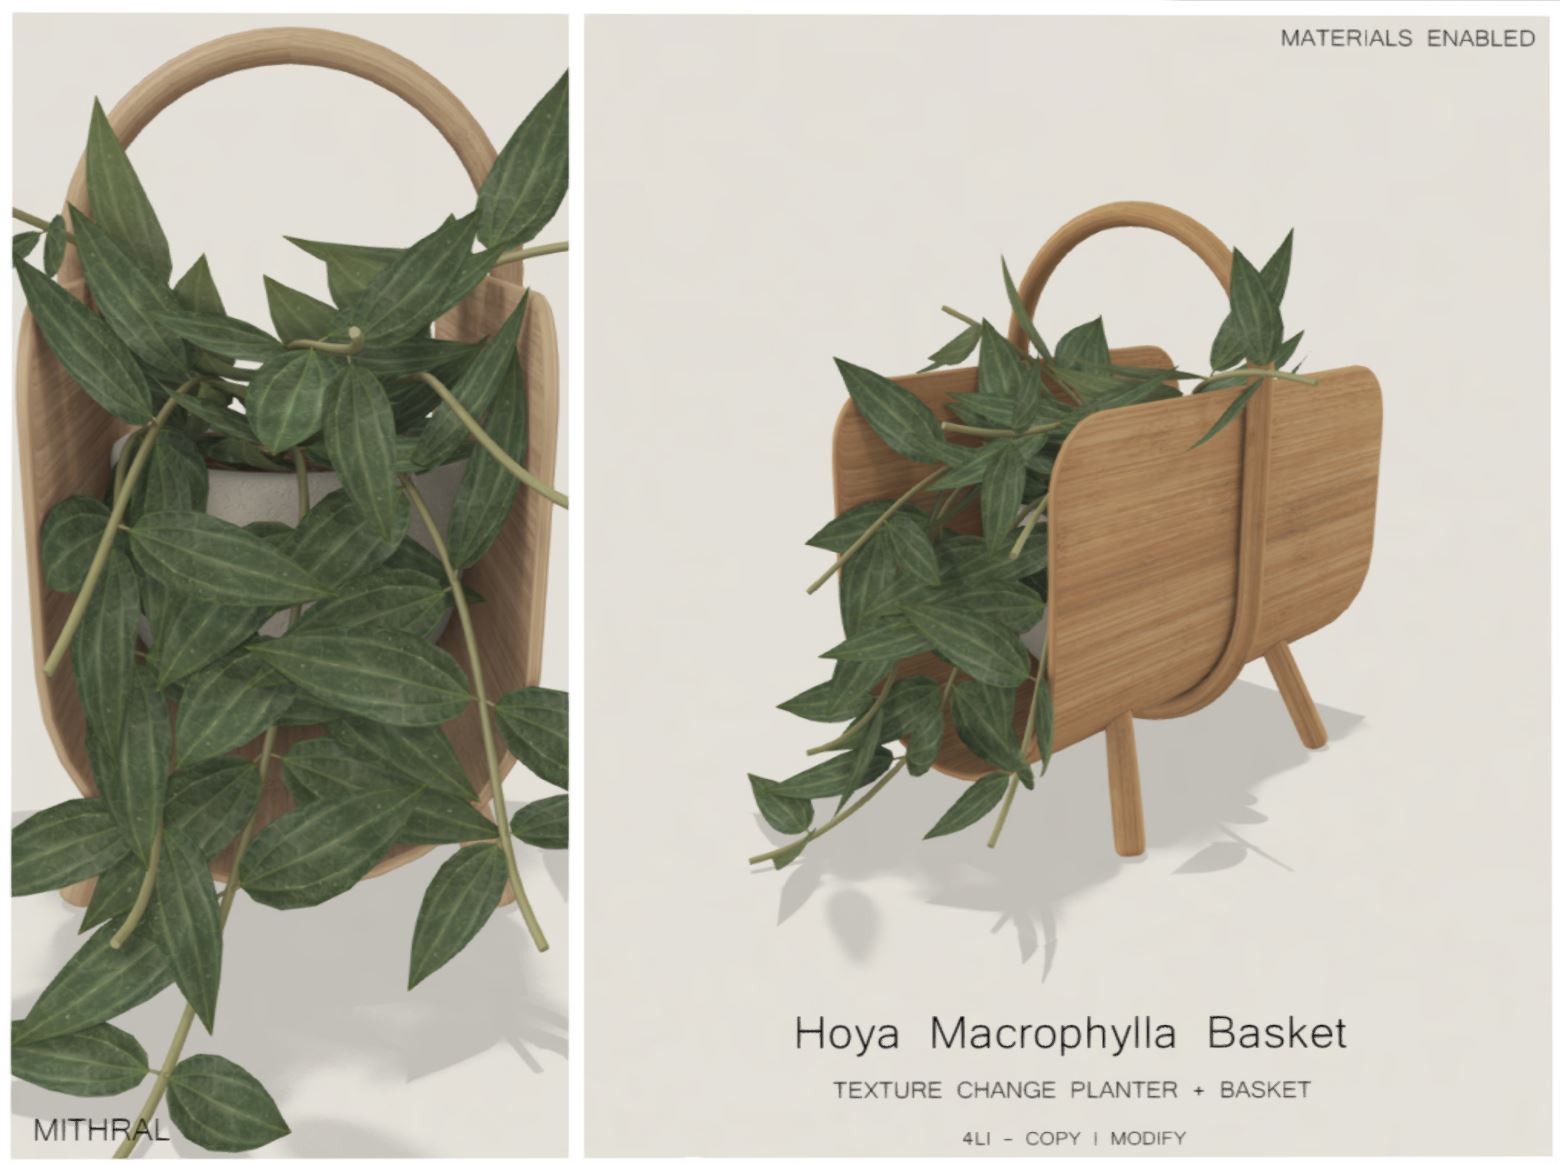 Mithral – Hoya Macrophylla Basket